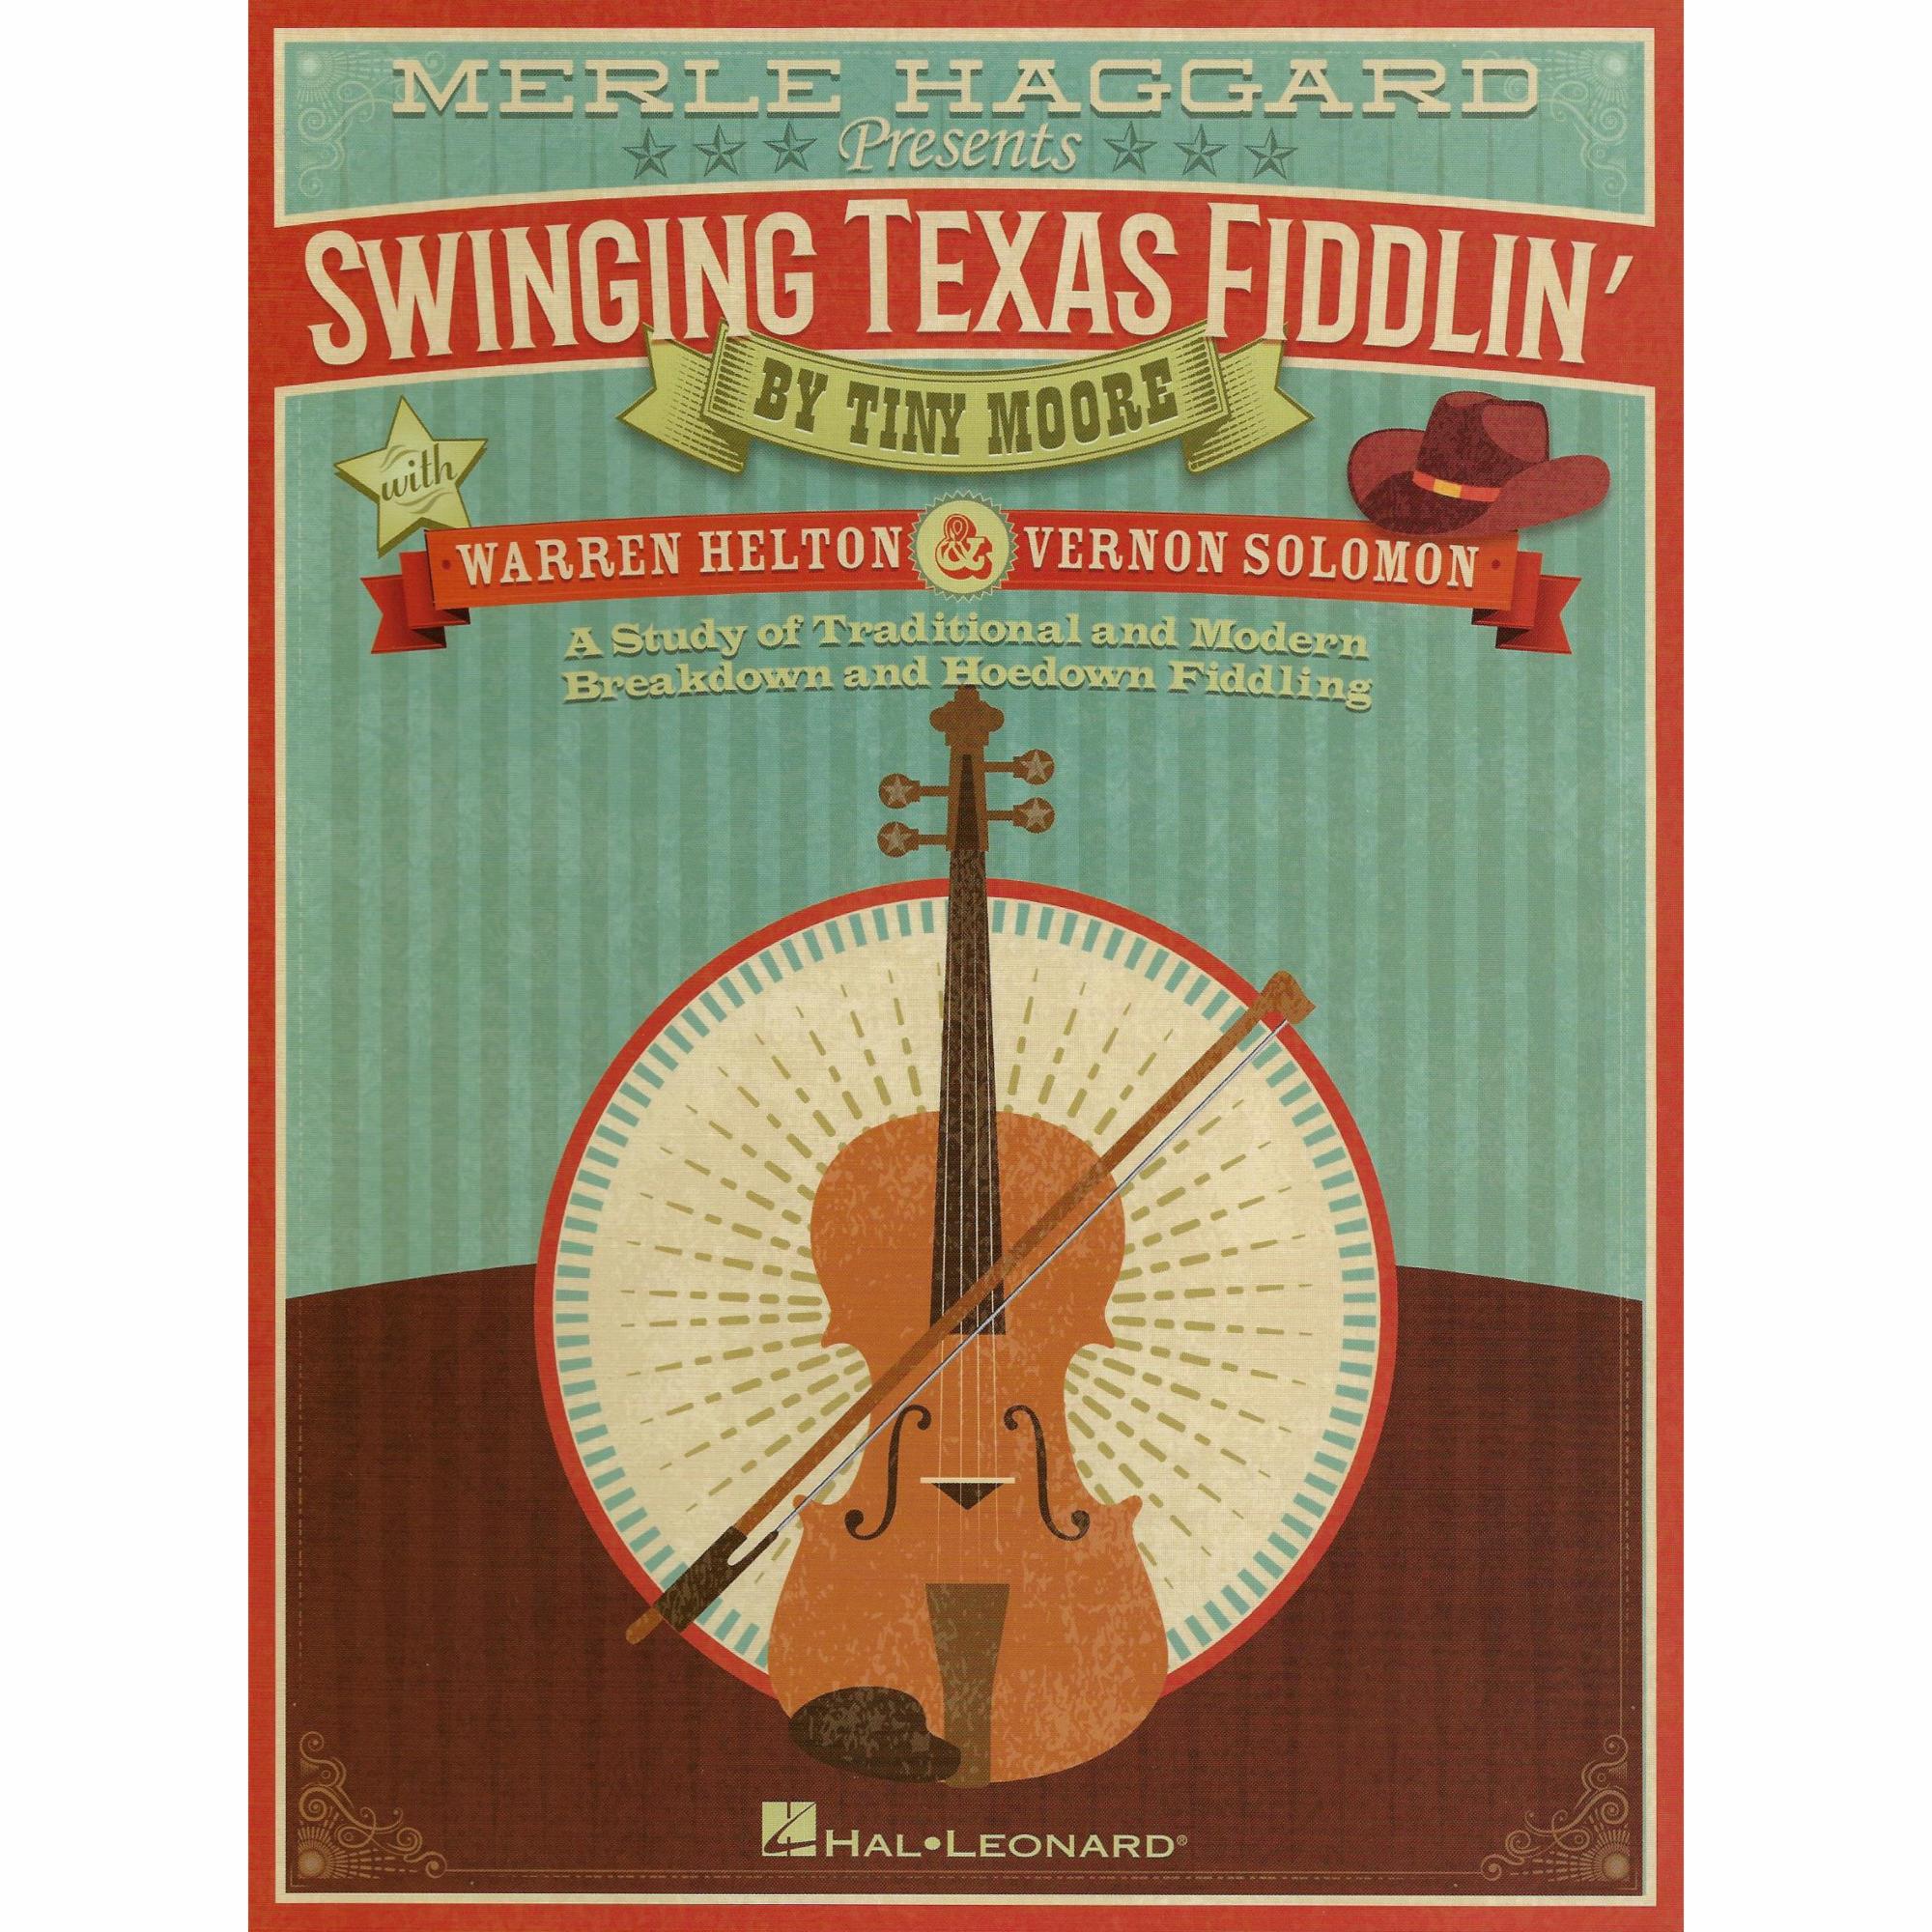 Swinging Texas Fiddlin'